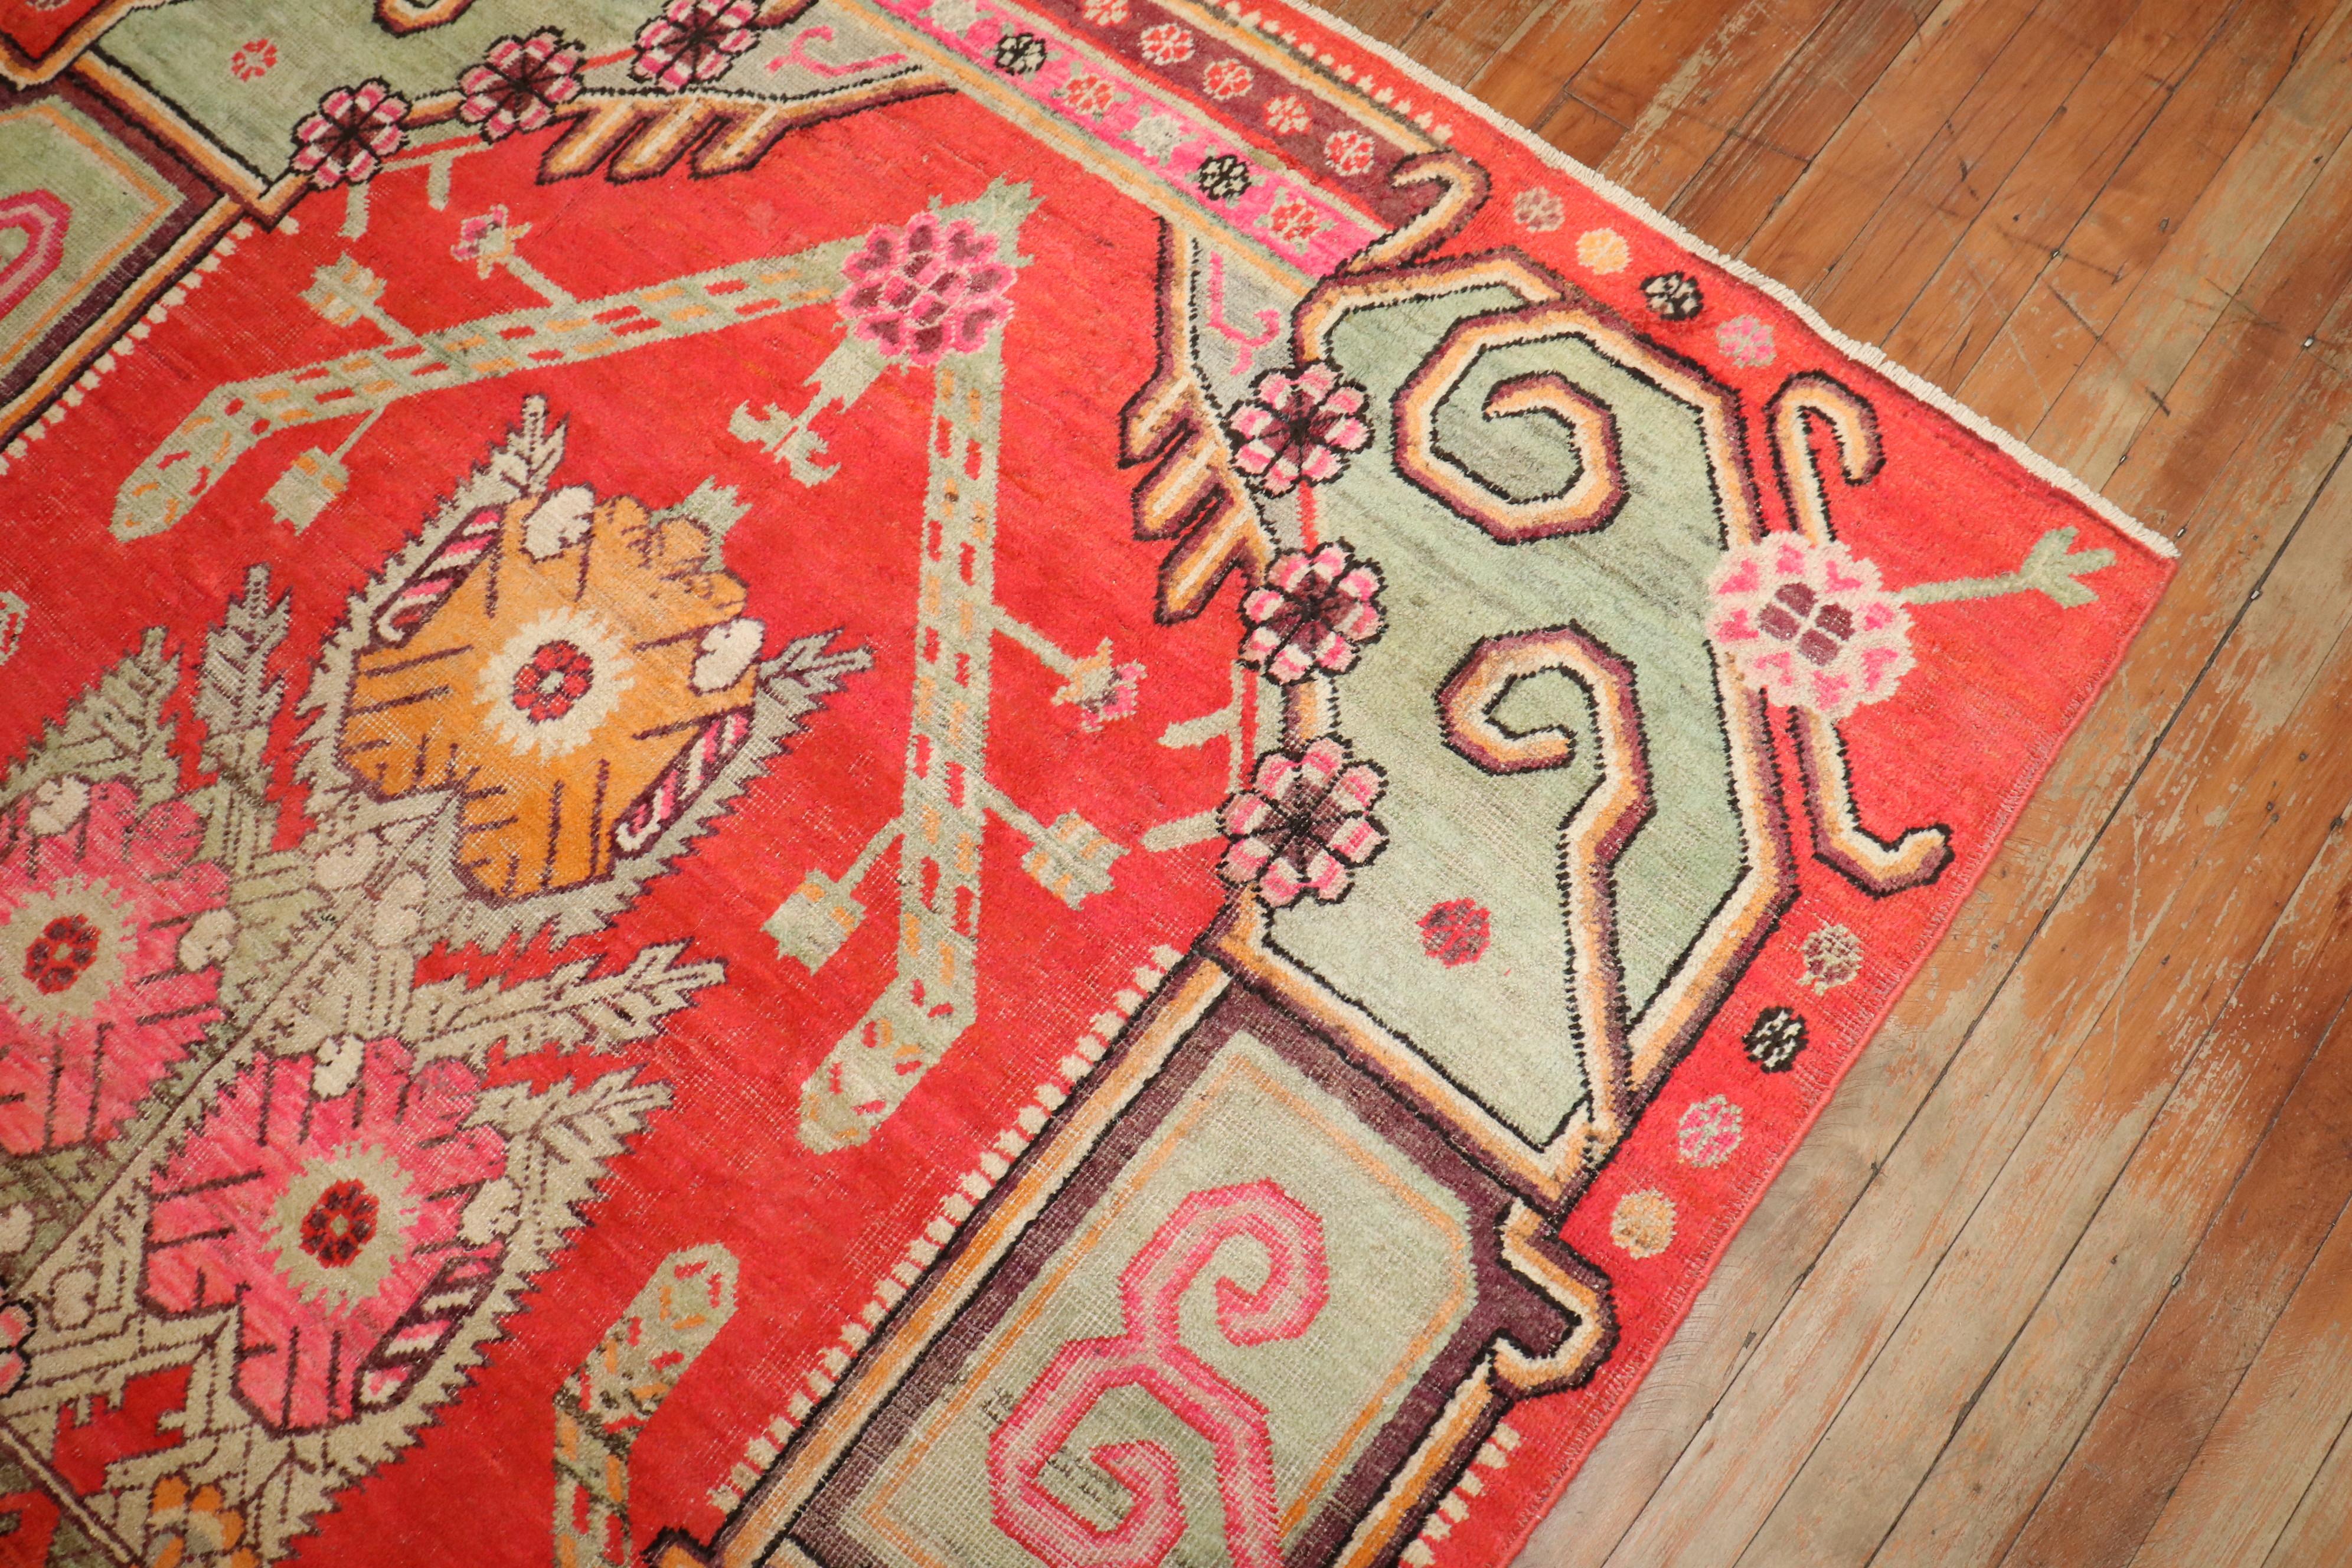 mid 20th century samarkand khotan rug

Details
rug no.	j3416

size	5' 2